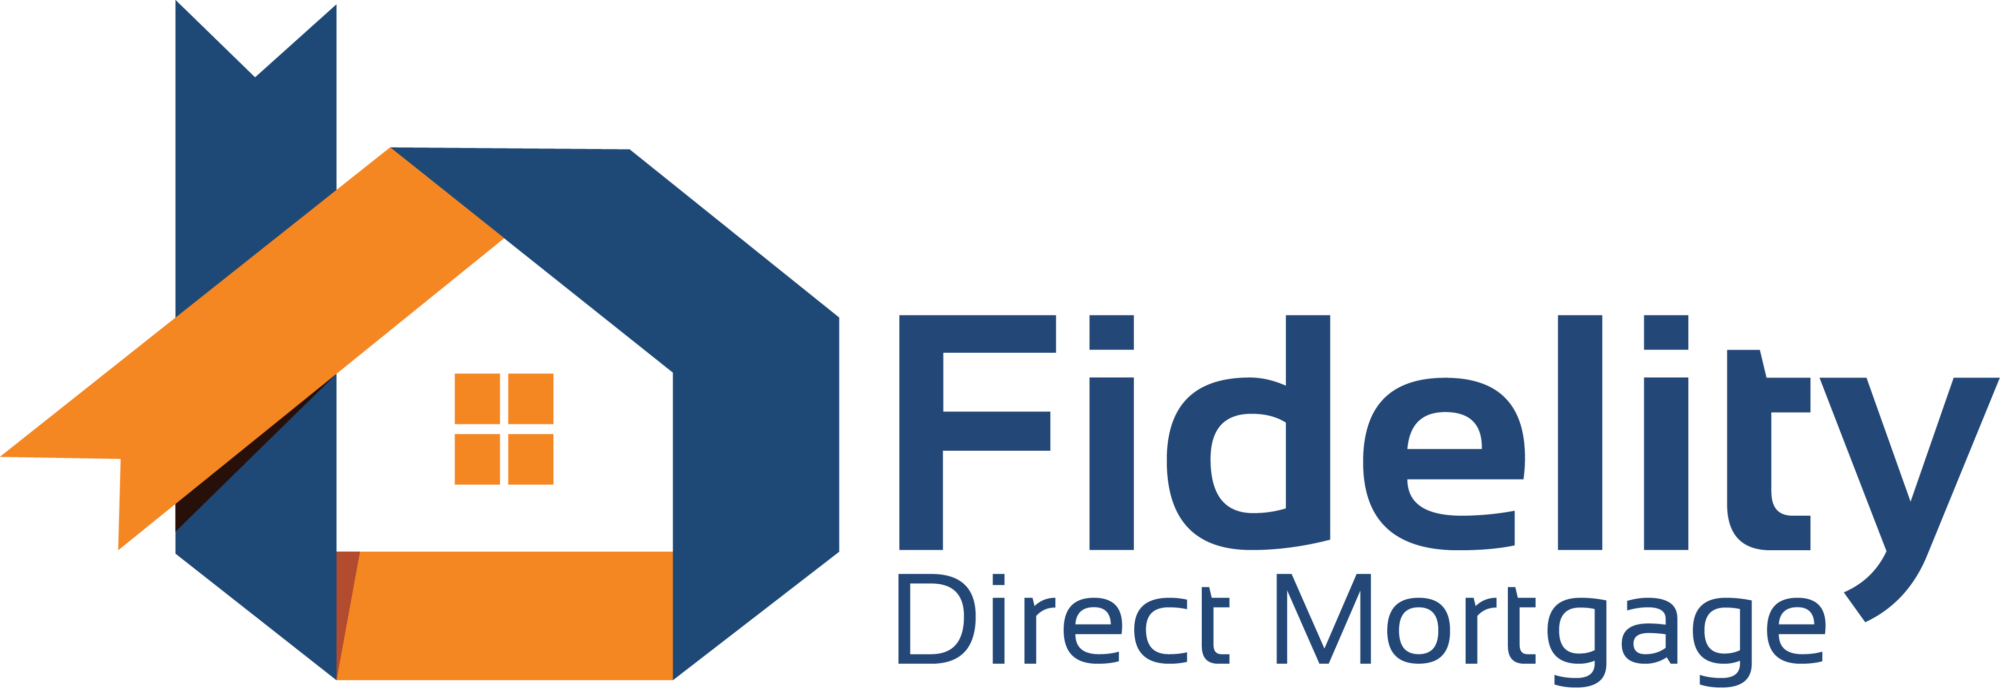 Fidelity Direct Mortgage logo final